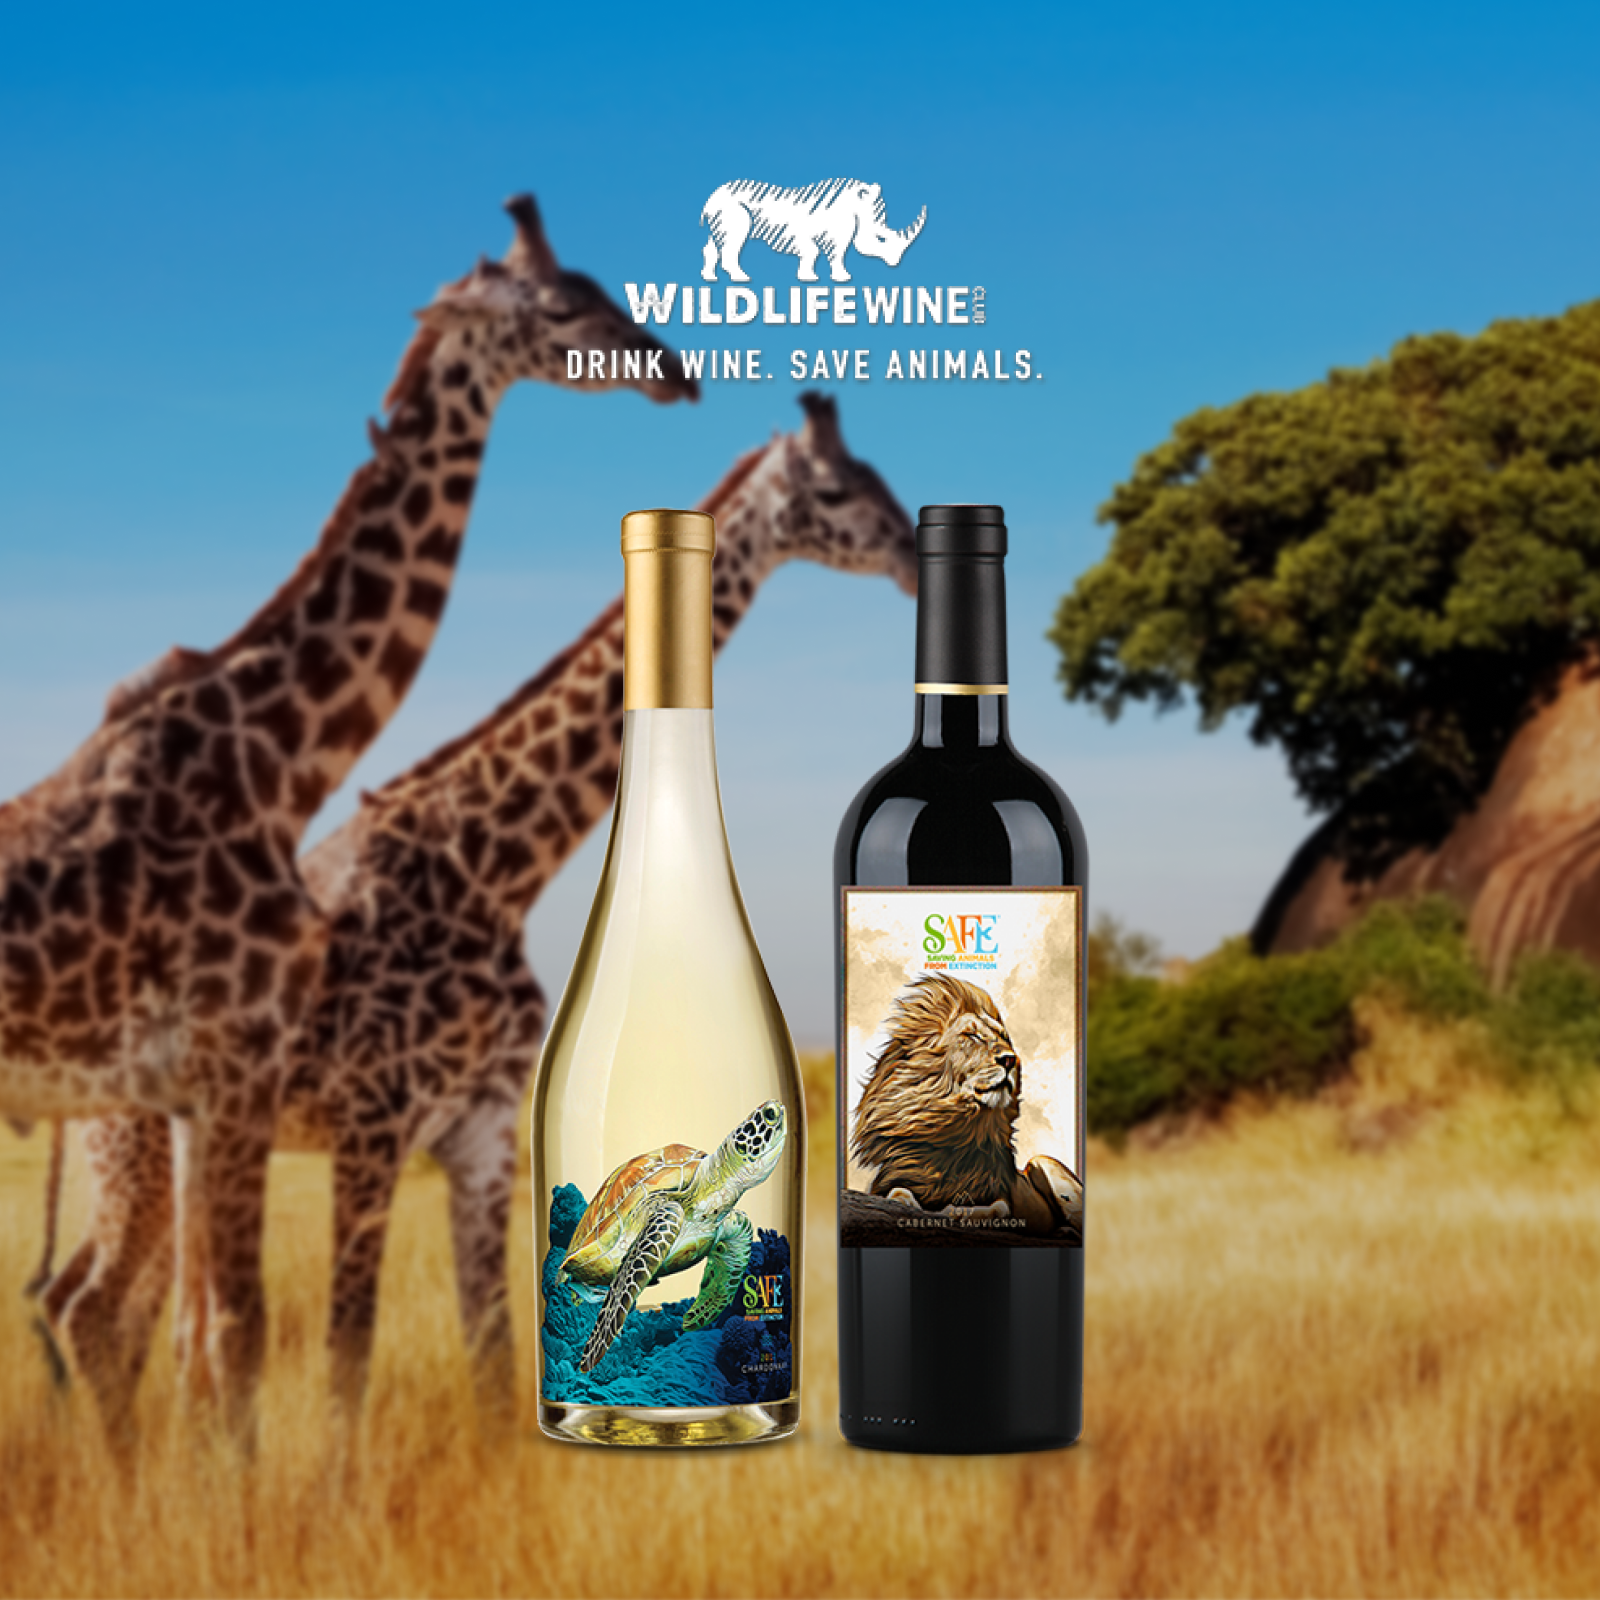 2 Wildlife Wine branded wine bottles